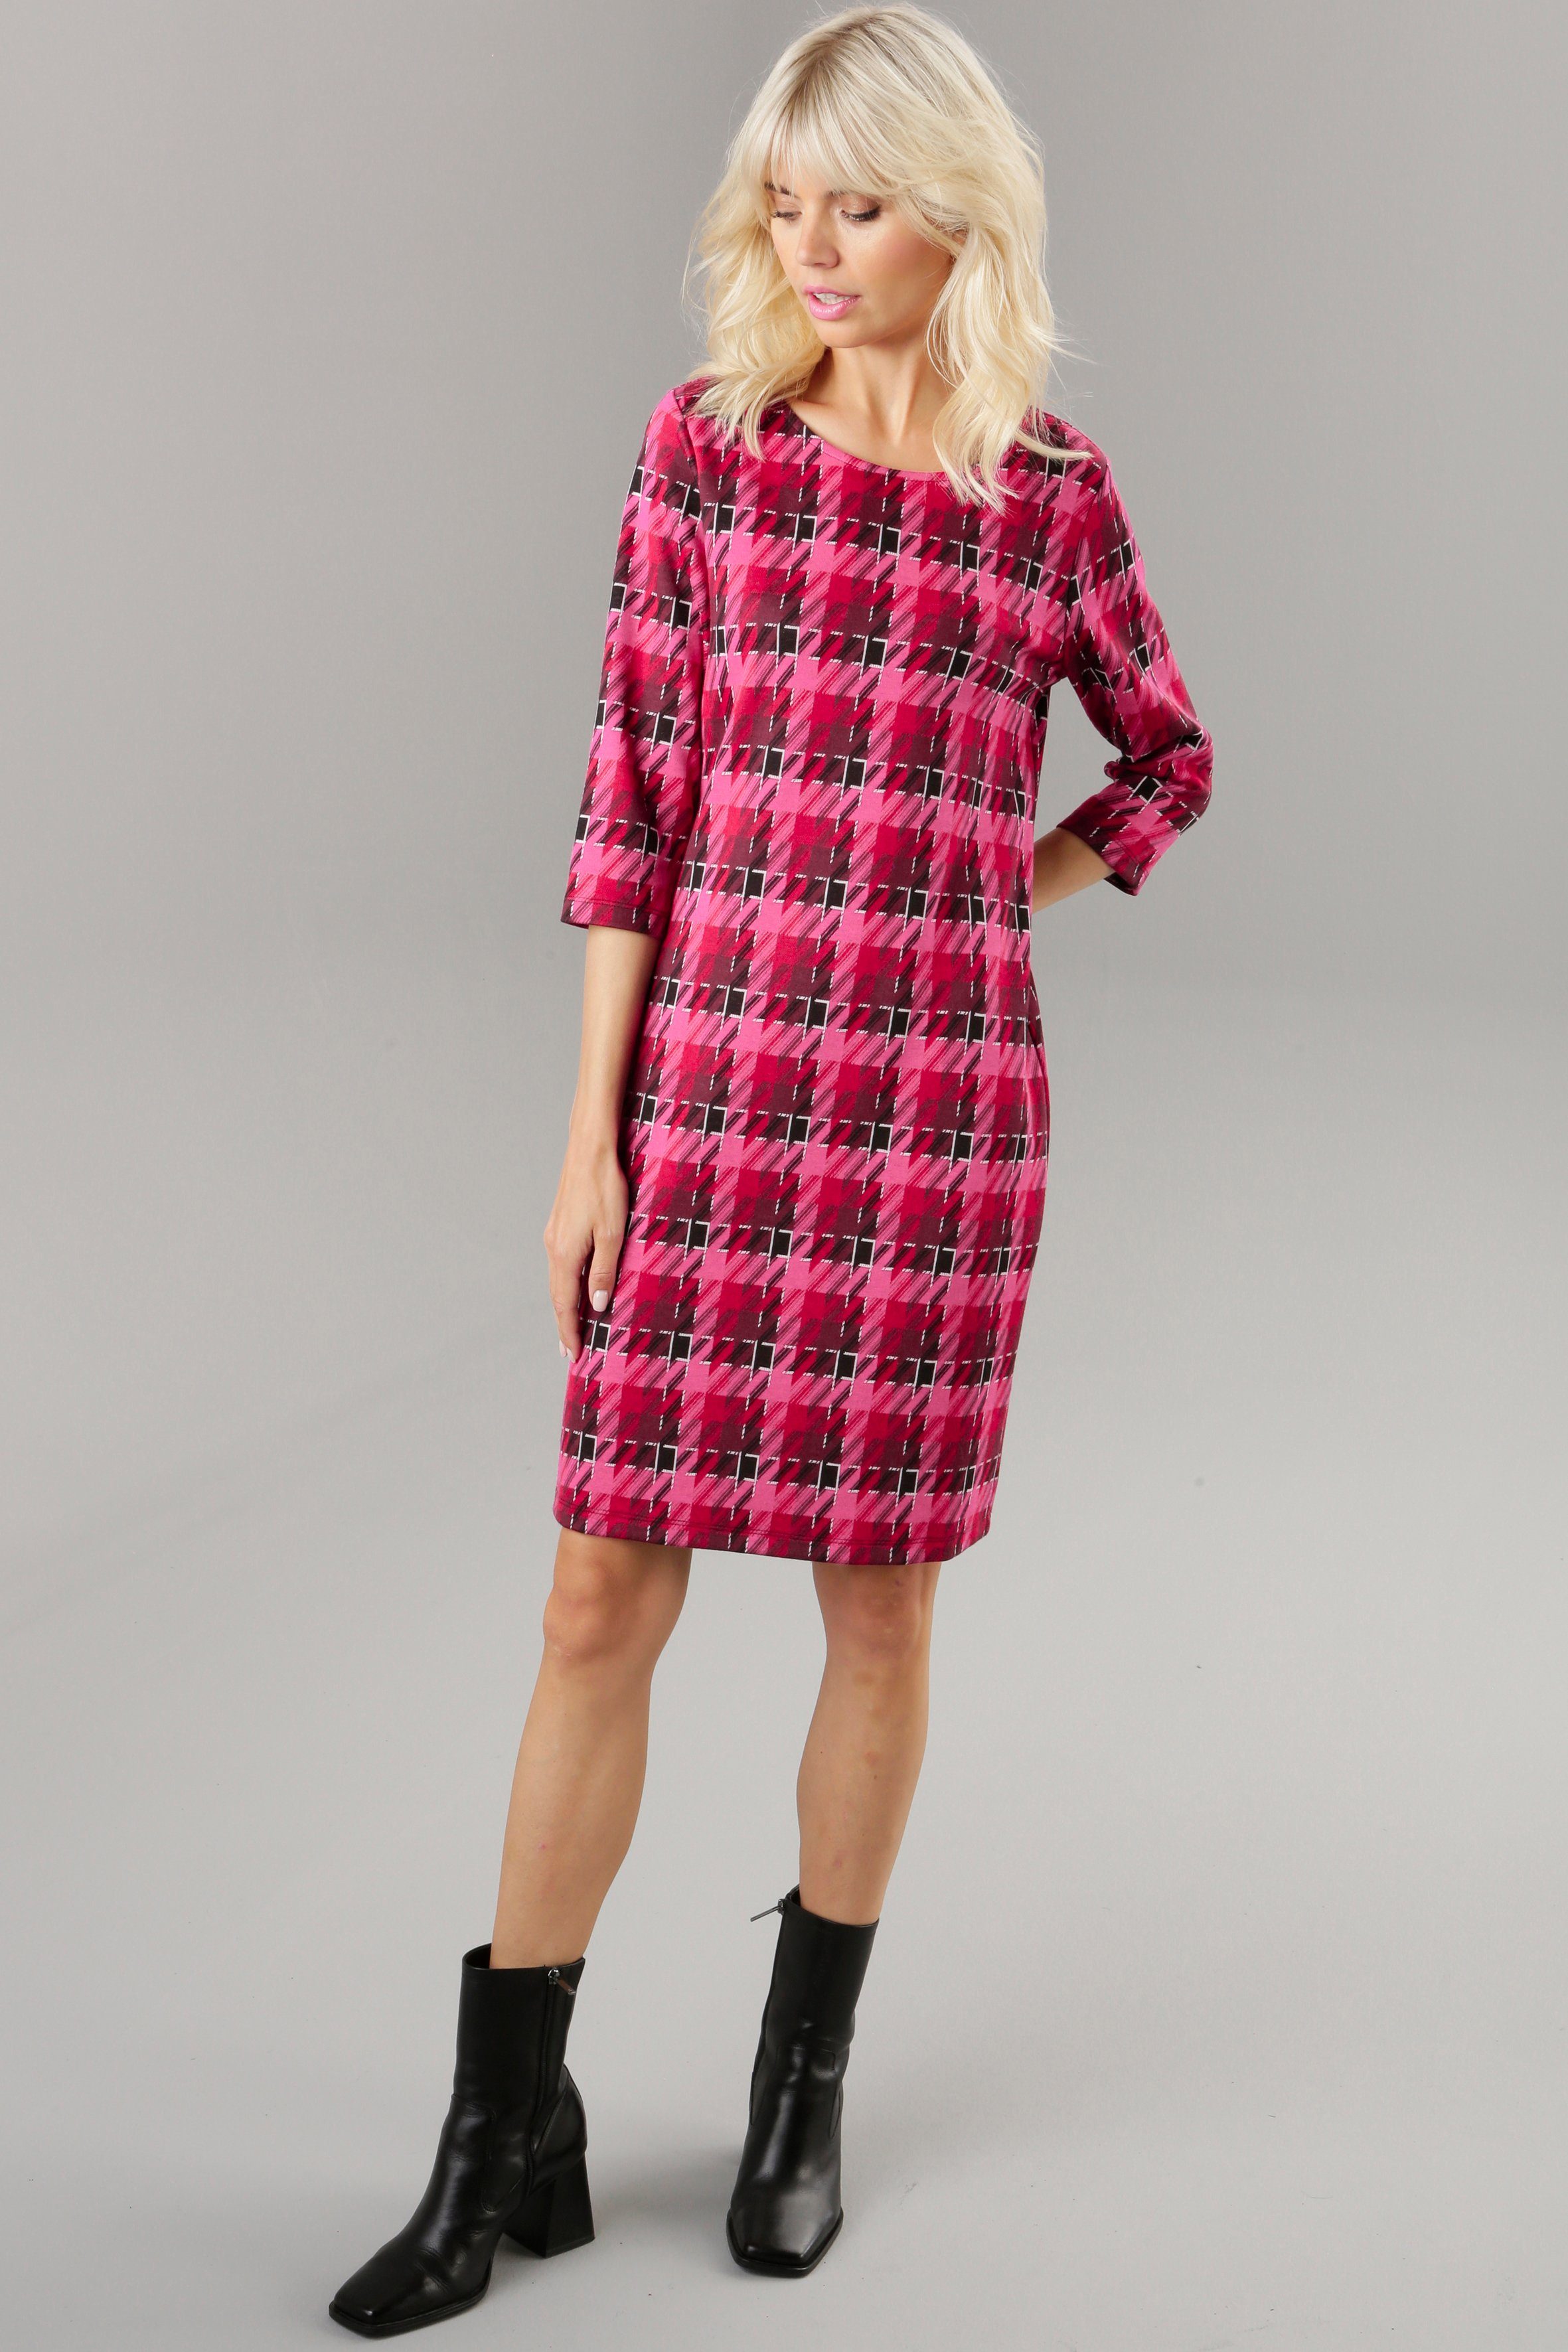 Aniston SELECTED Jerseykleid mit trendy Allover-Muster in Knallfarben